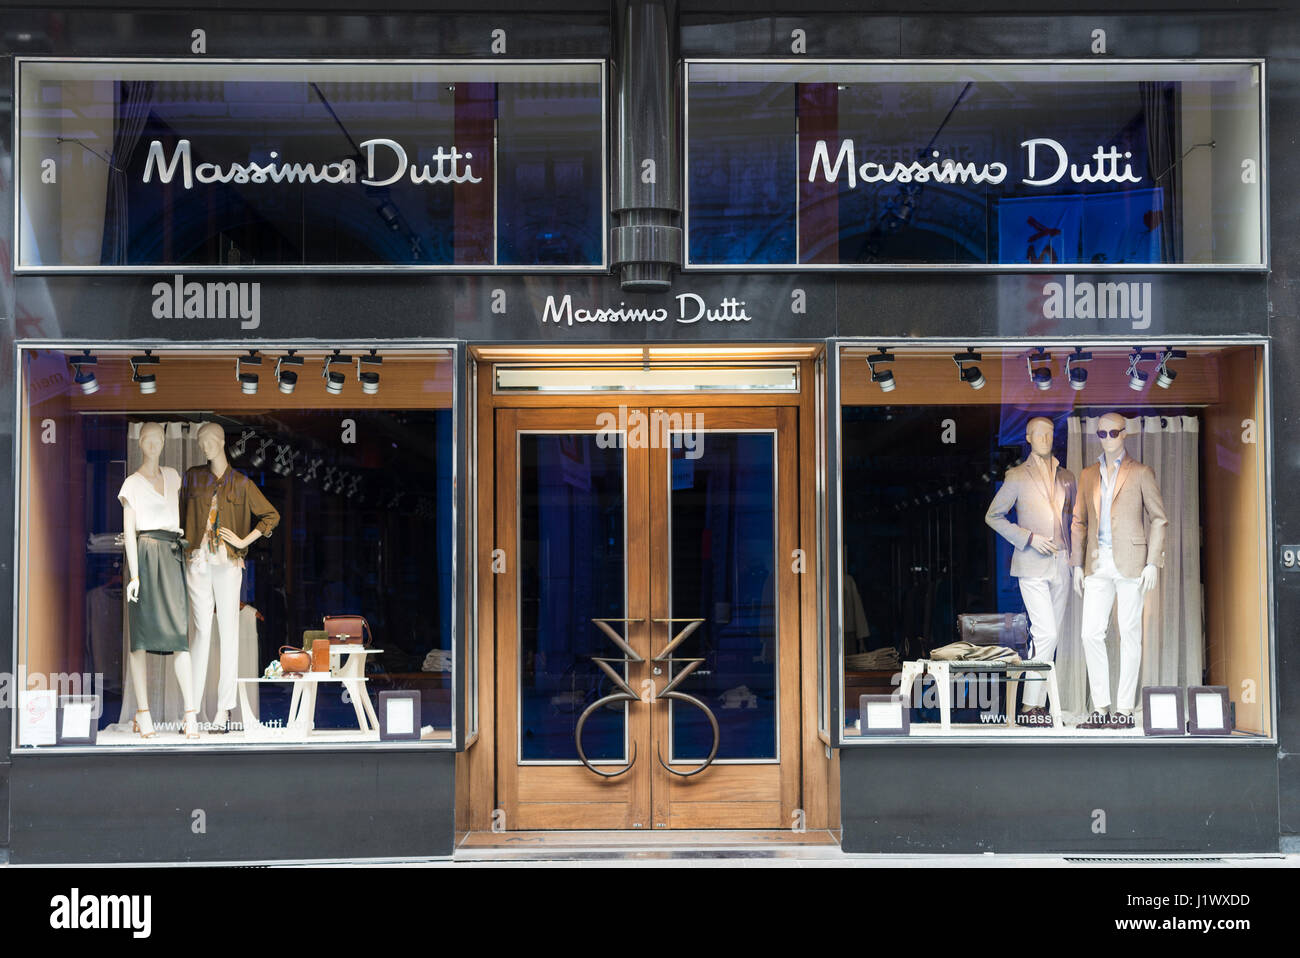 Massimo Dutti Store in Antwerpen Stockfotografie - Alamy